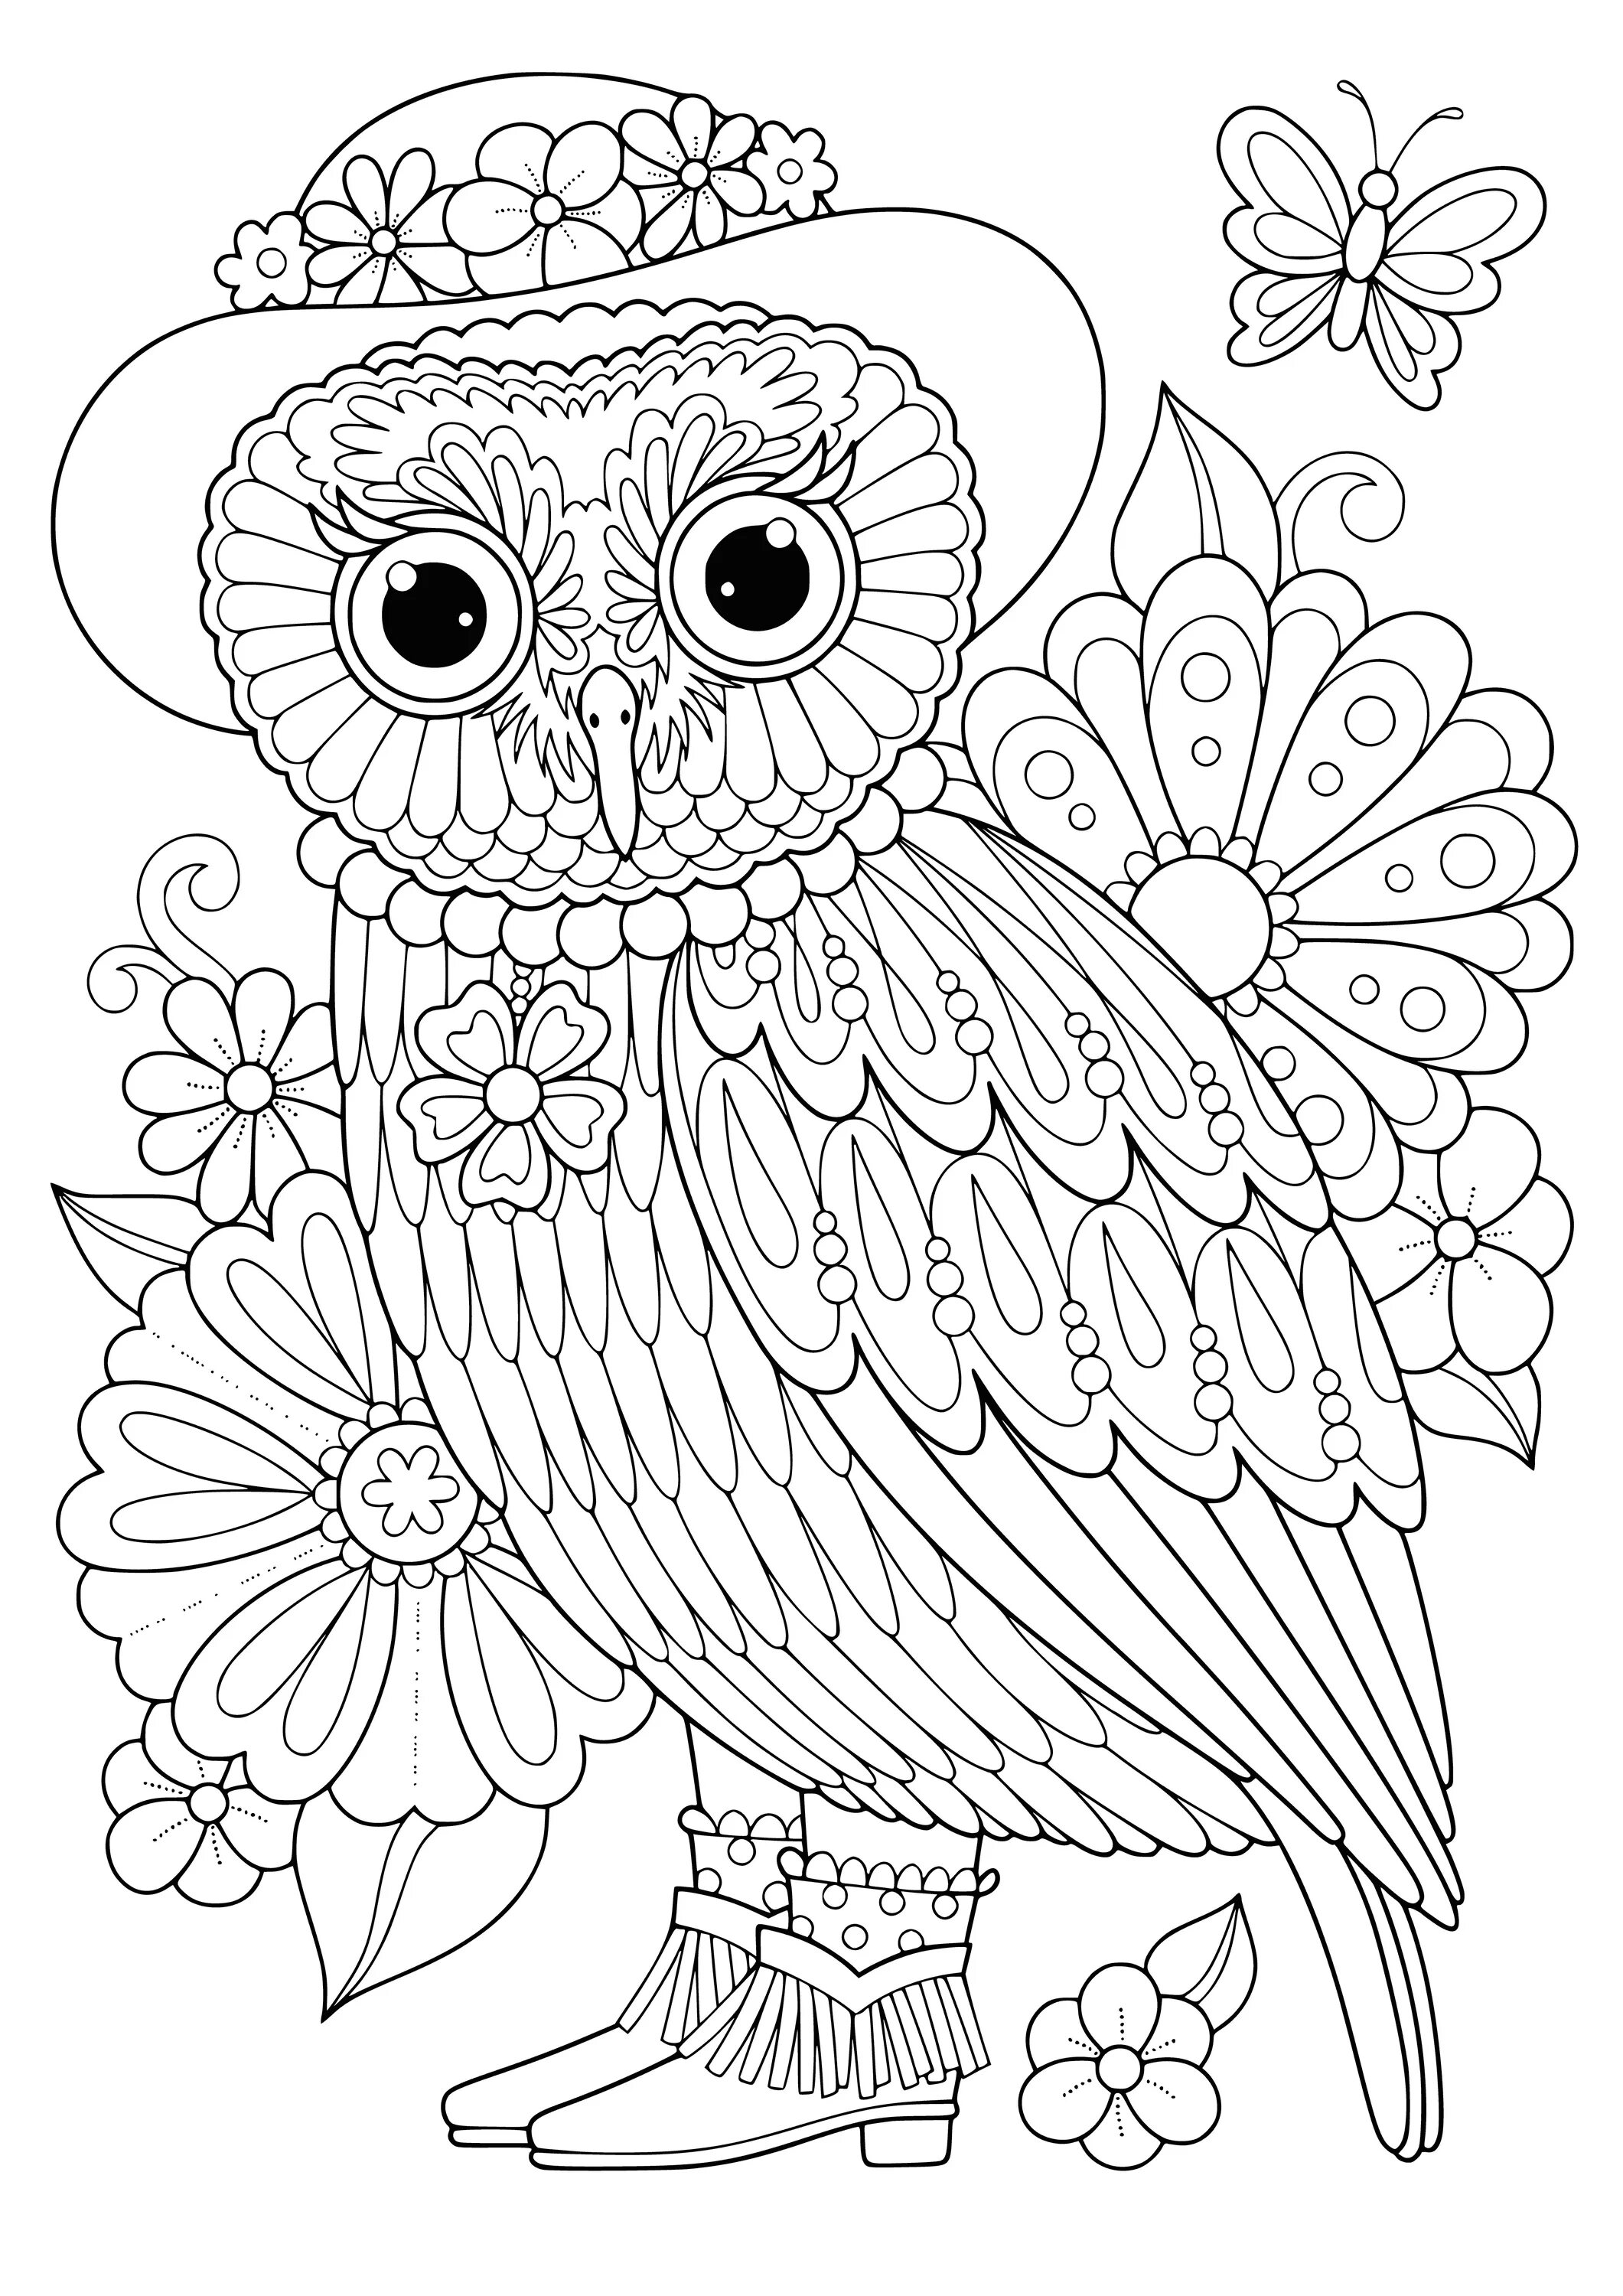 Coloring mystical anti-stress owls